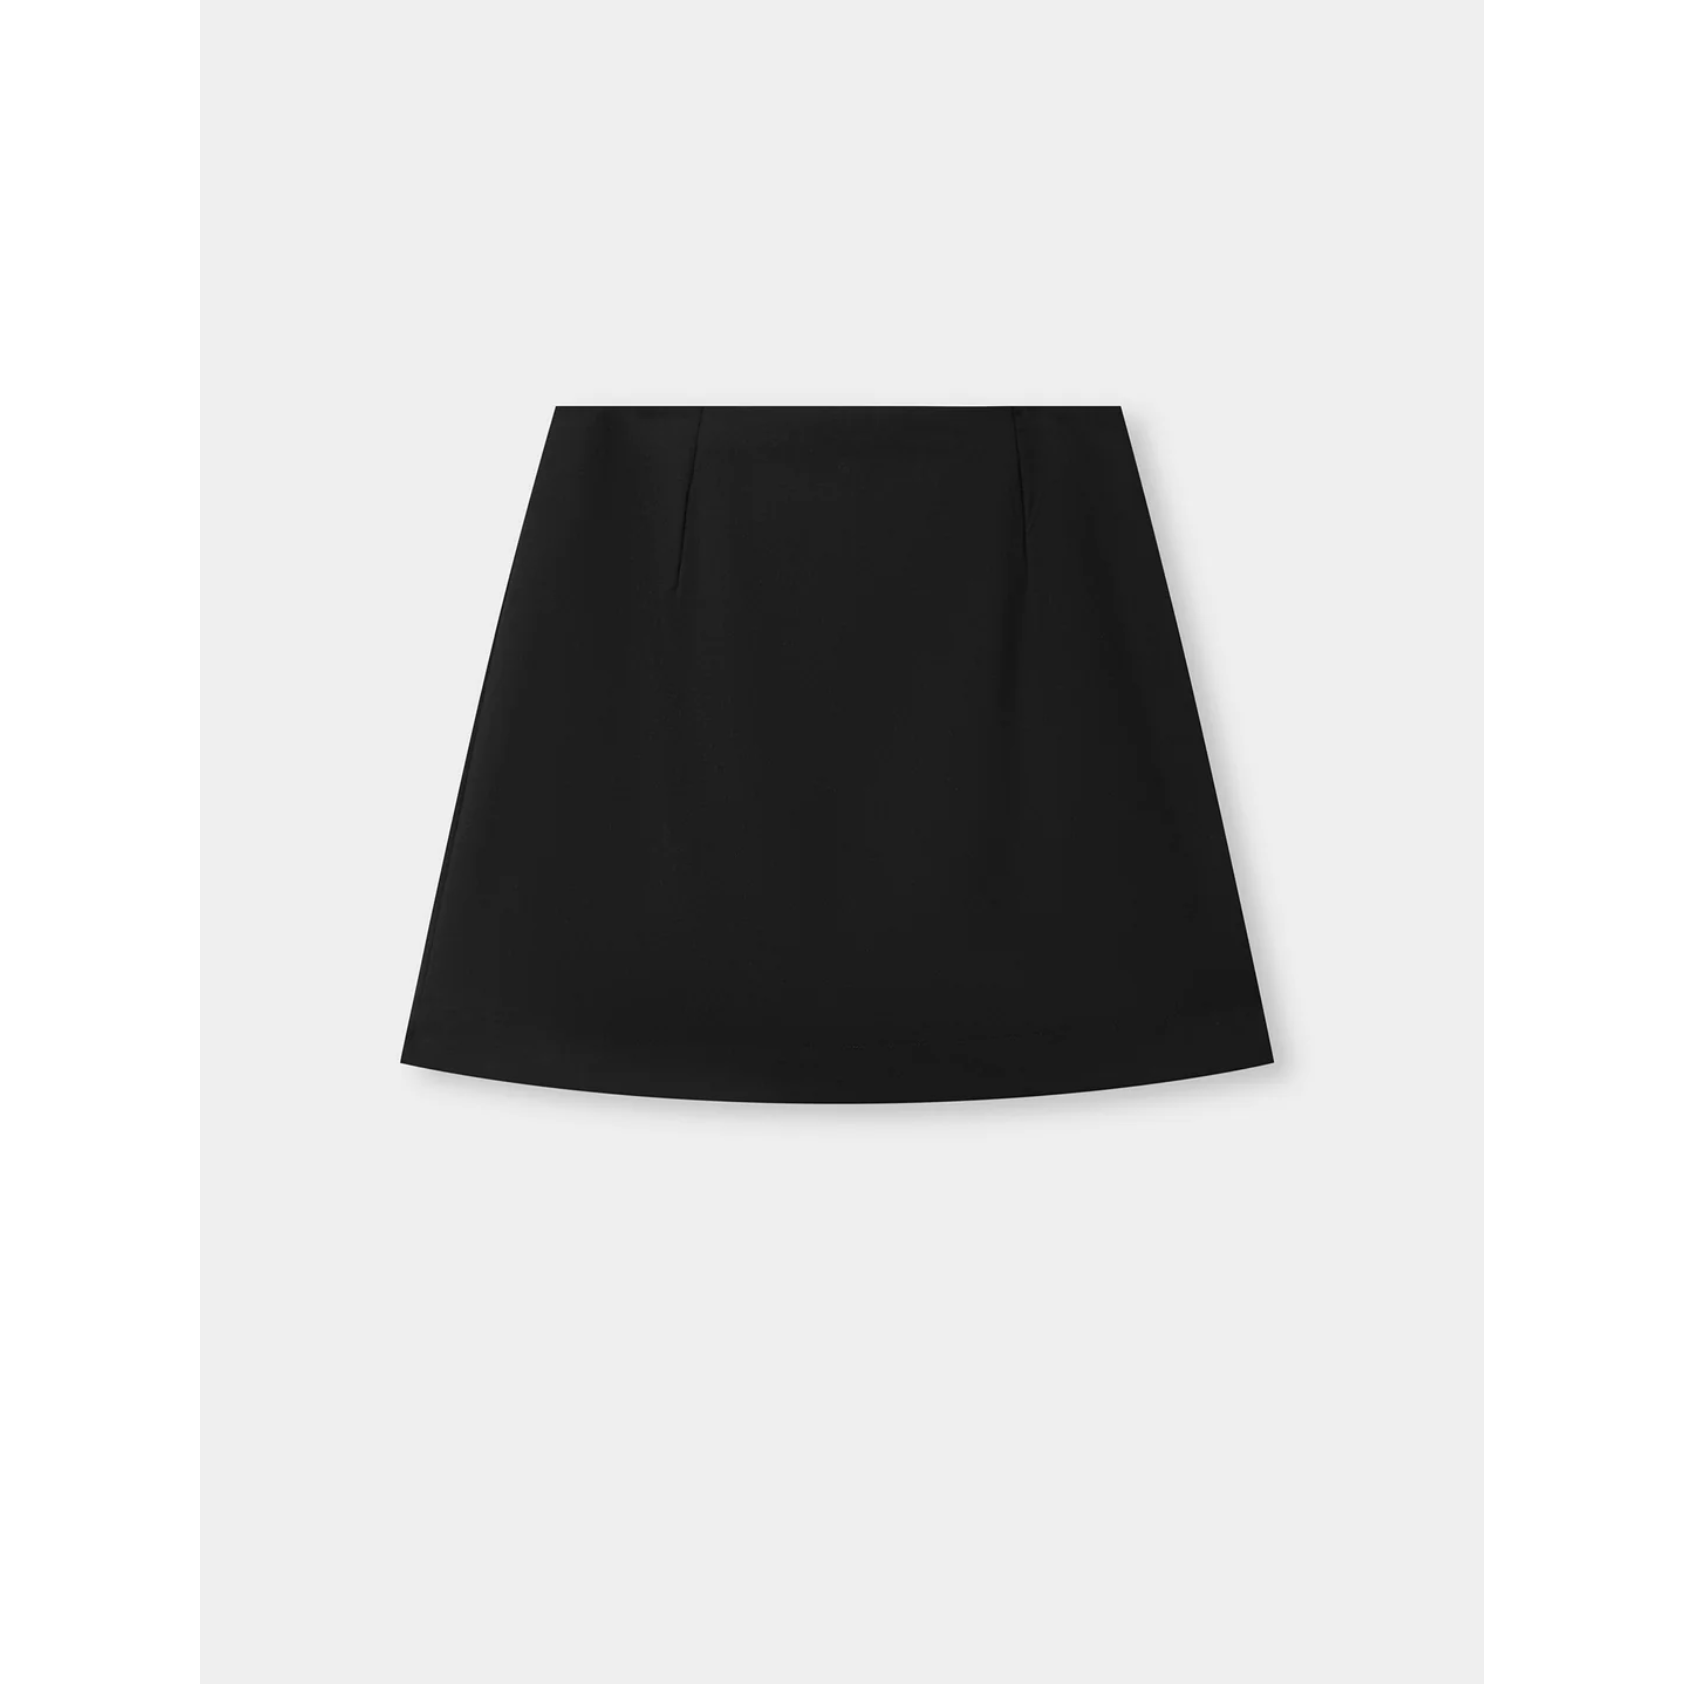 Assembly Label Maeve Skirt Black